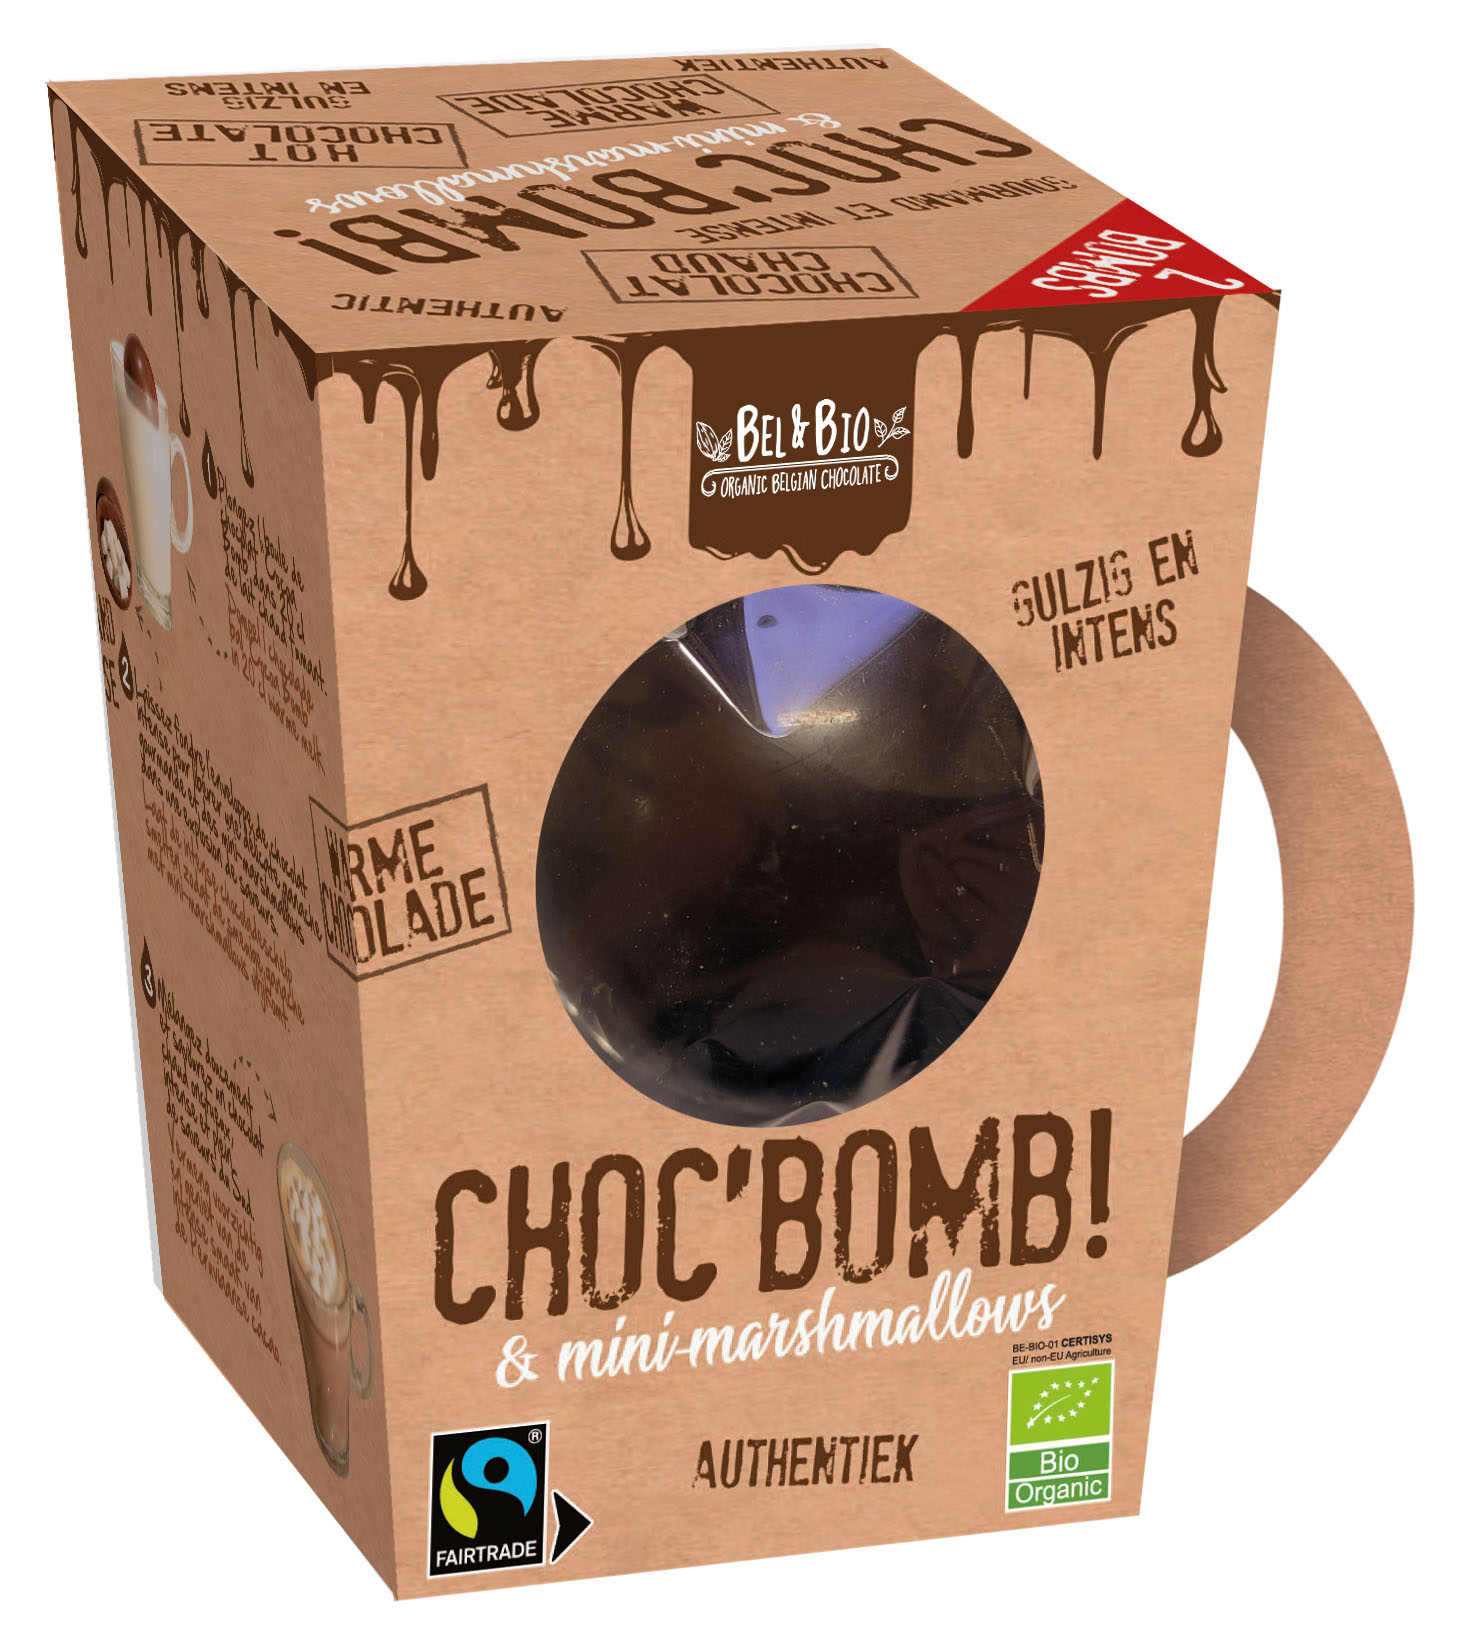 Choc'Bombs & mini marshmallows 70g